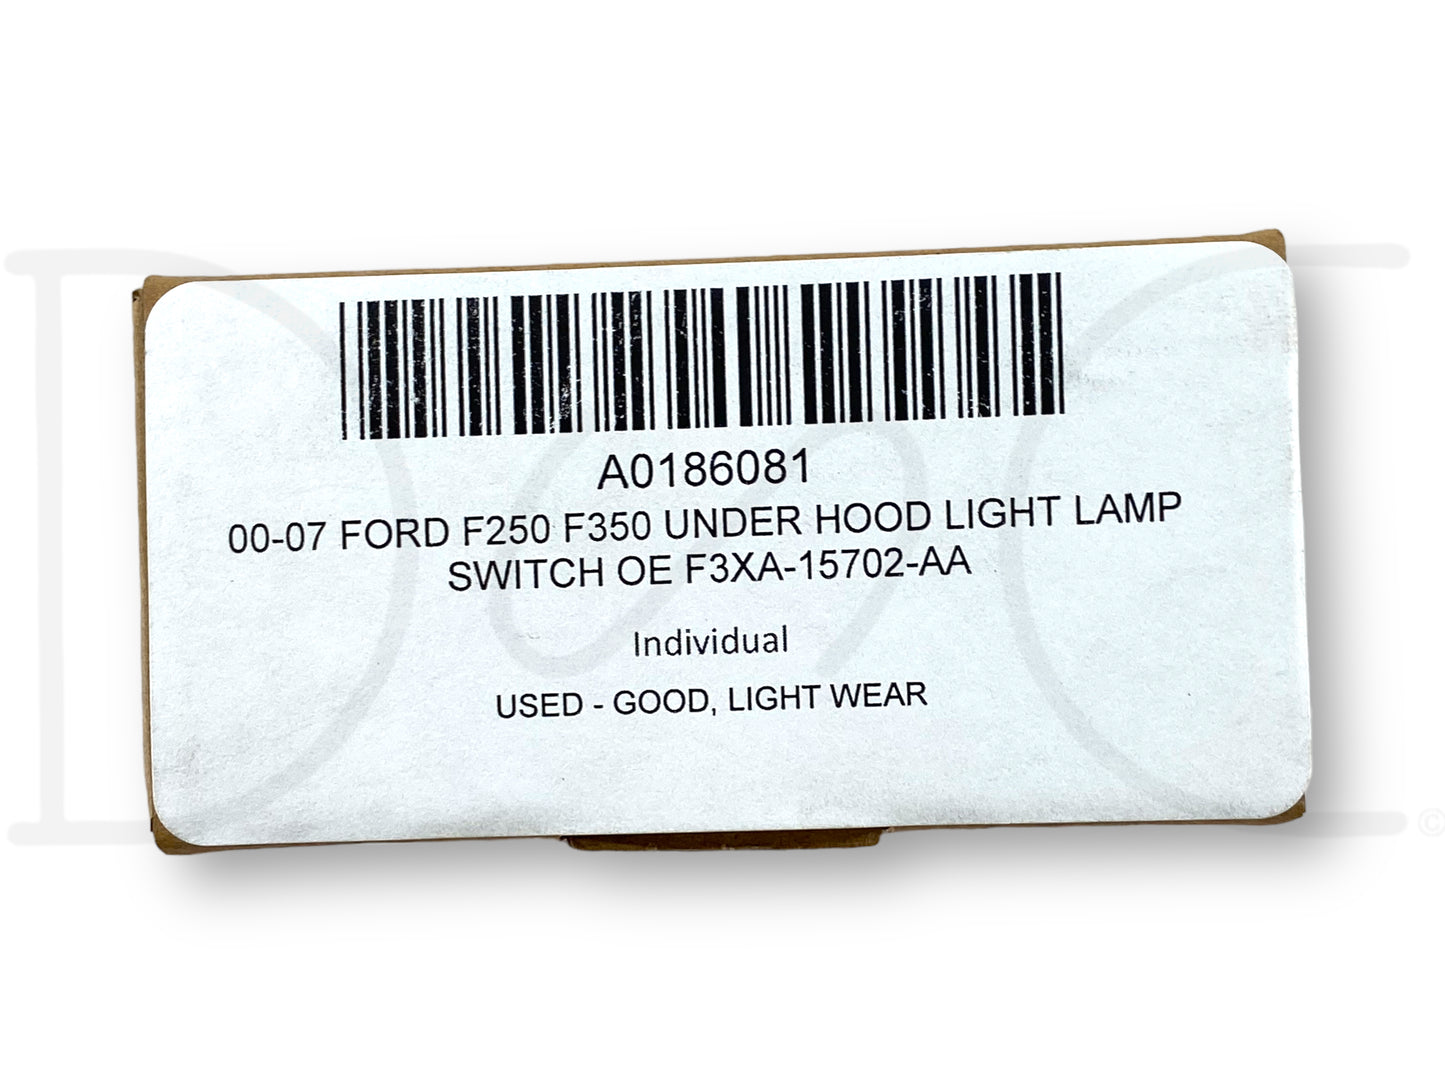 00-07 Ford F250 F350 Under Hood Light Lamp Switch OE F3Xa-15702-Aa